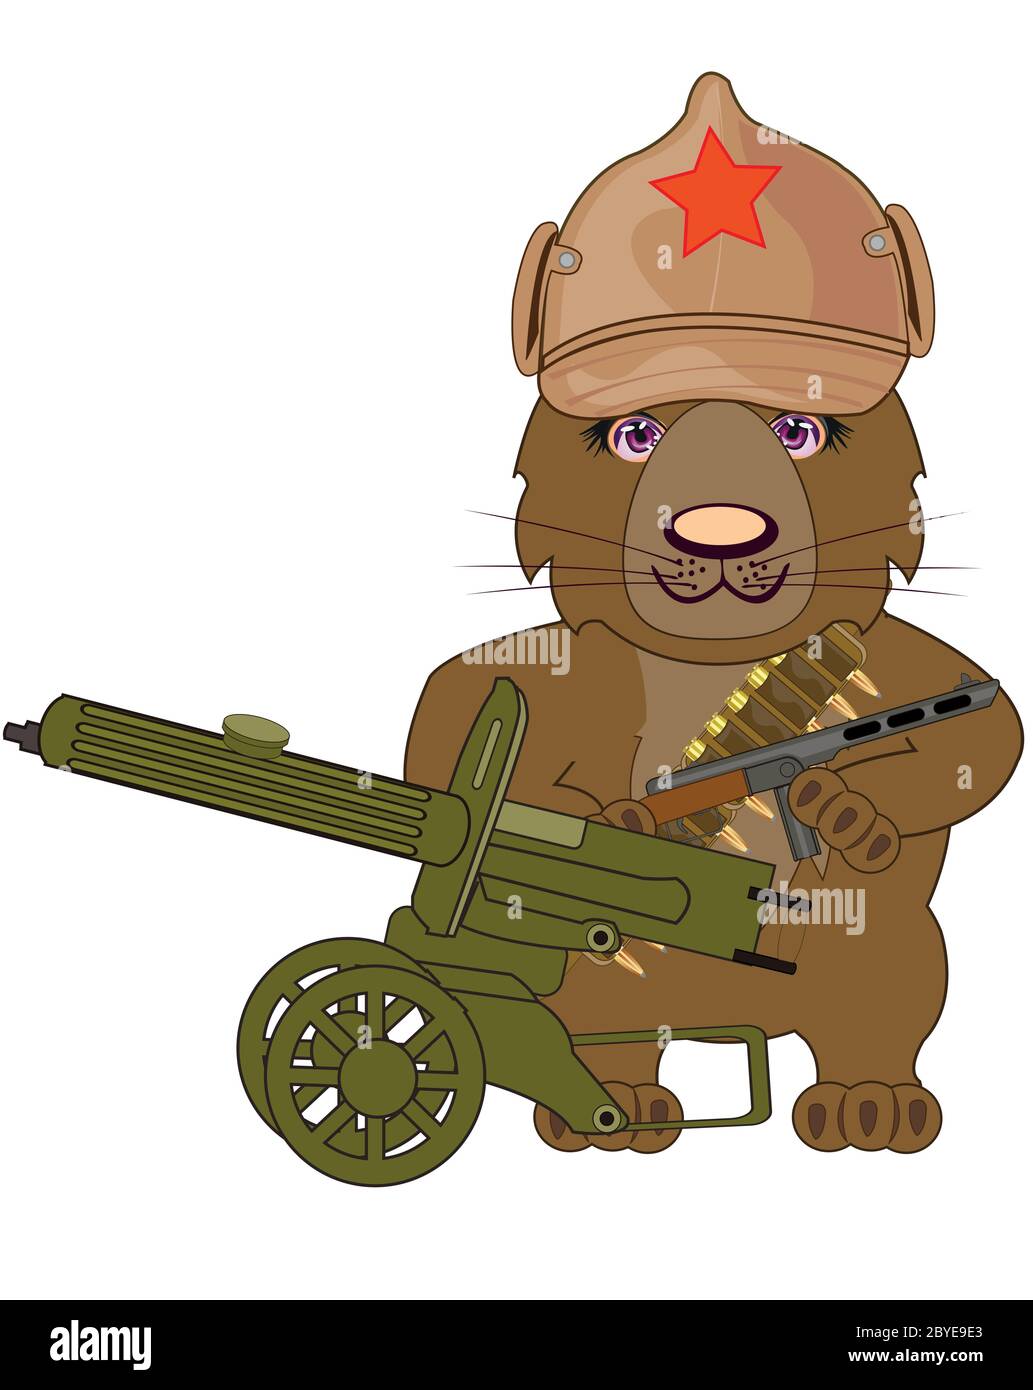 Russische Bär revolutionäre mit Maschinengewehr Cartoon Stock Vektor